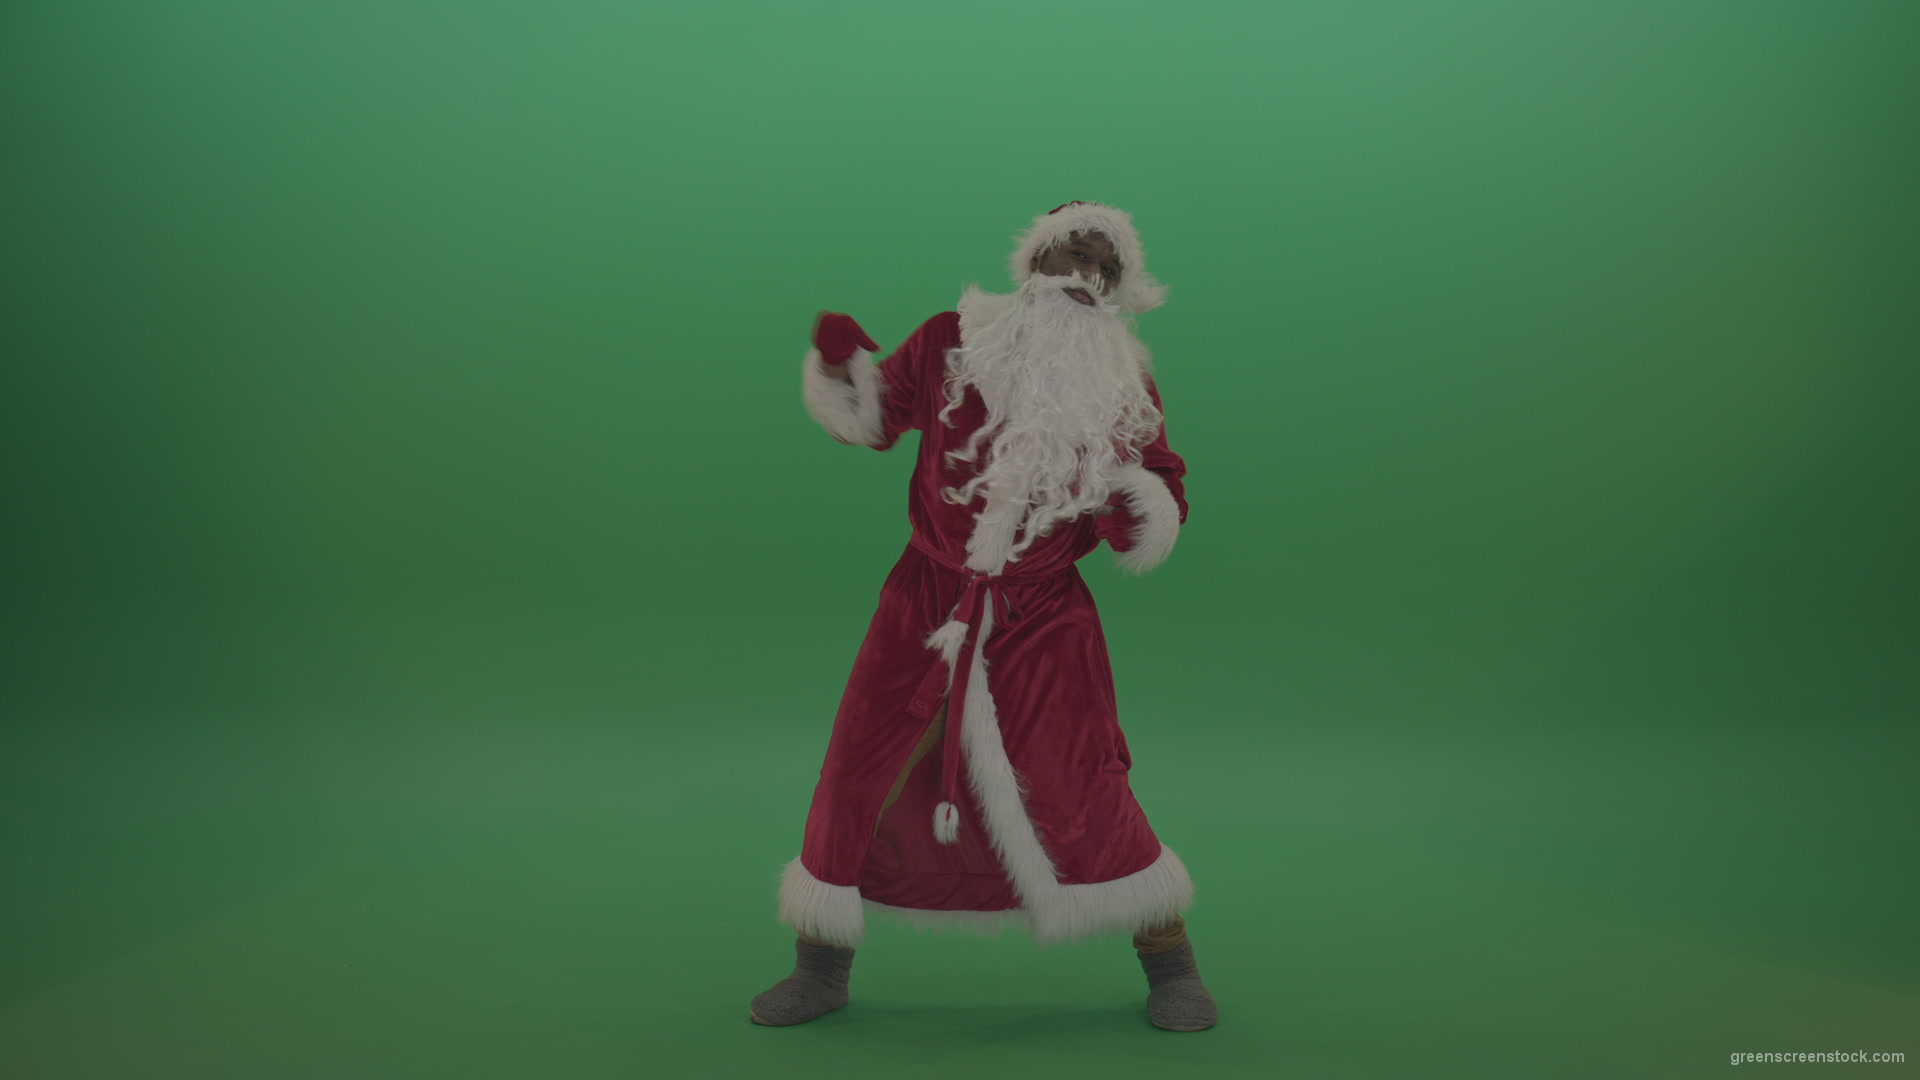 Crazy-santa-moves-over-chromakey-background_007 Green Screen Stock